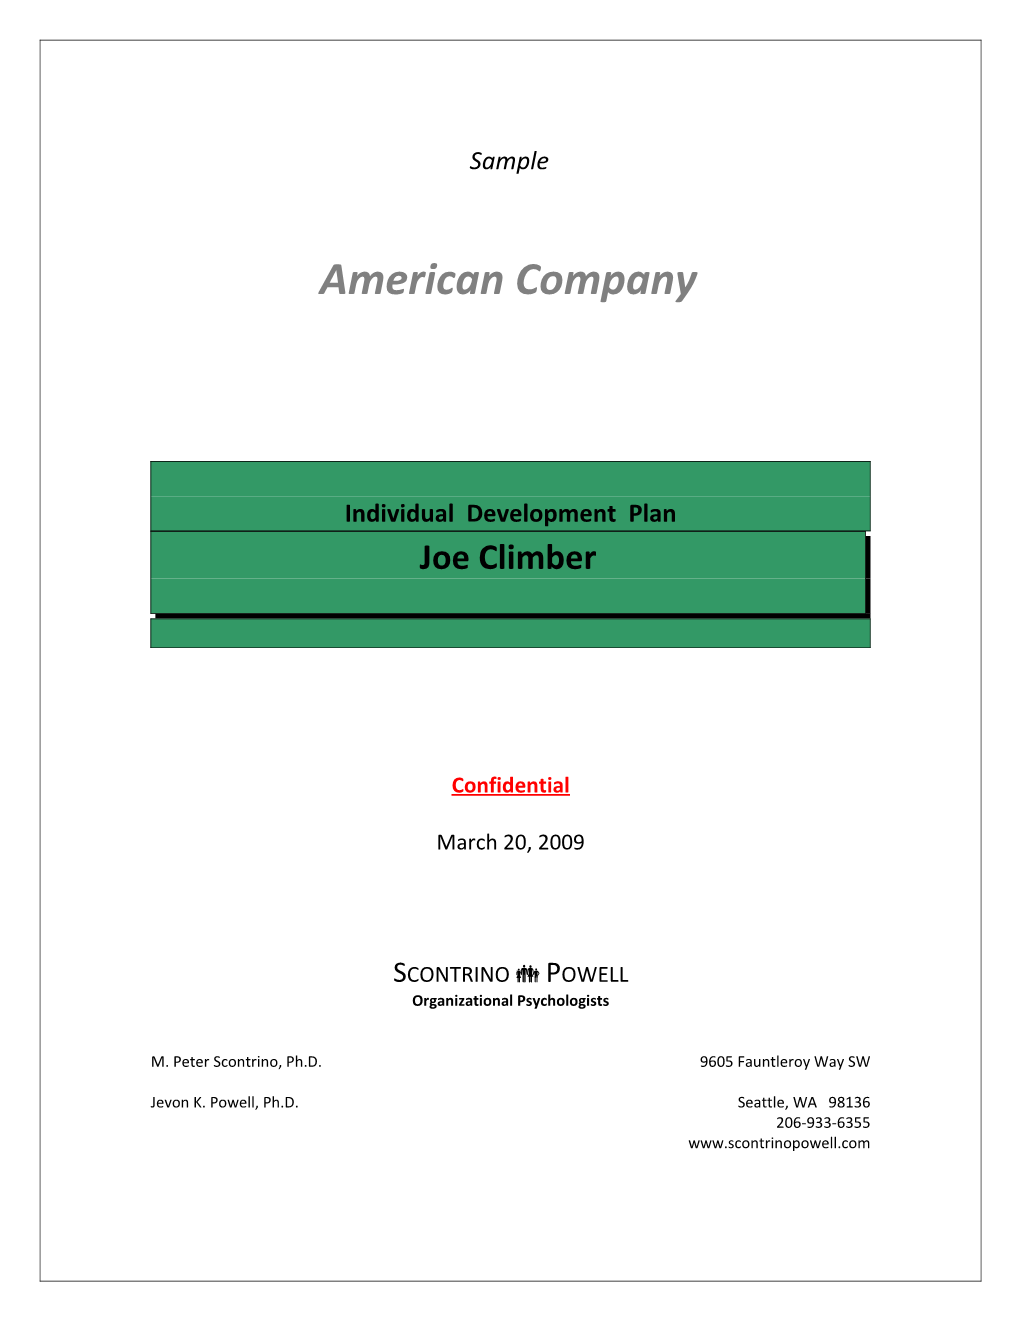 American Company